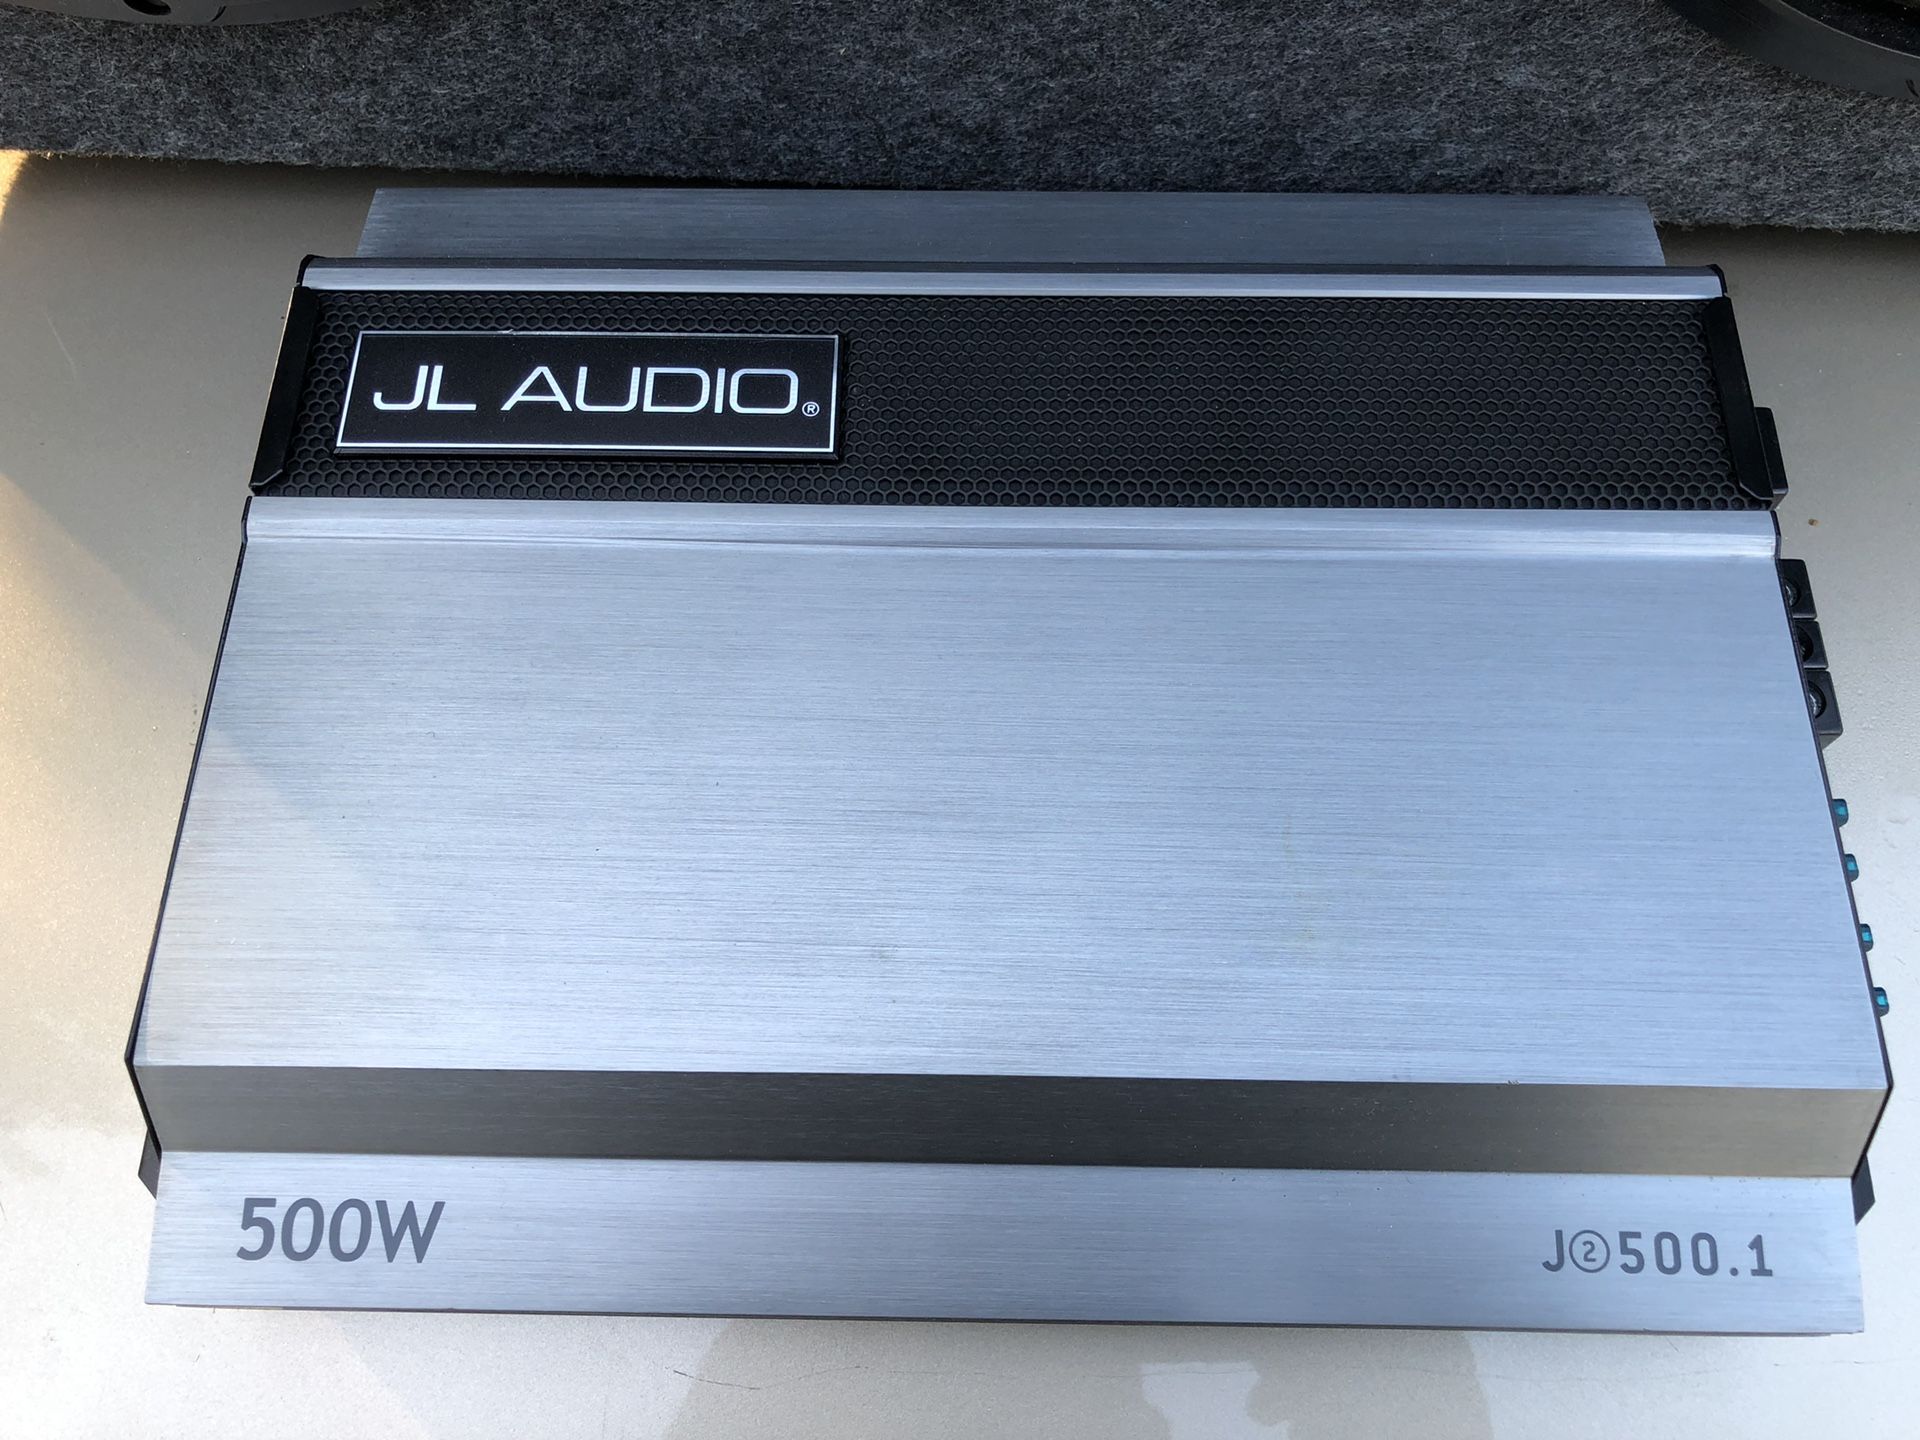 JL audio speaker n 500W amp $150